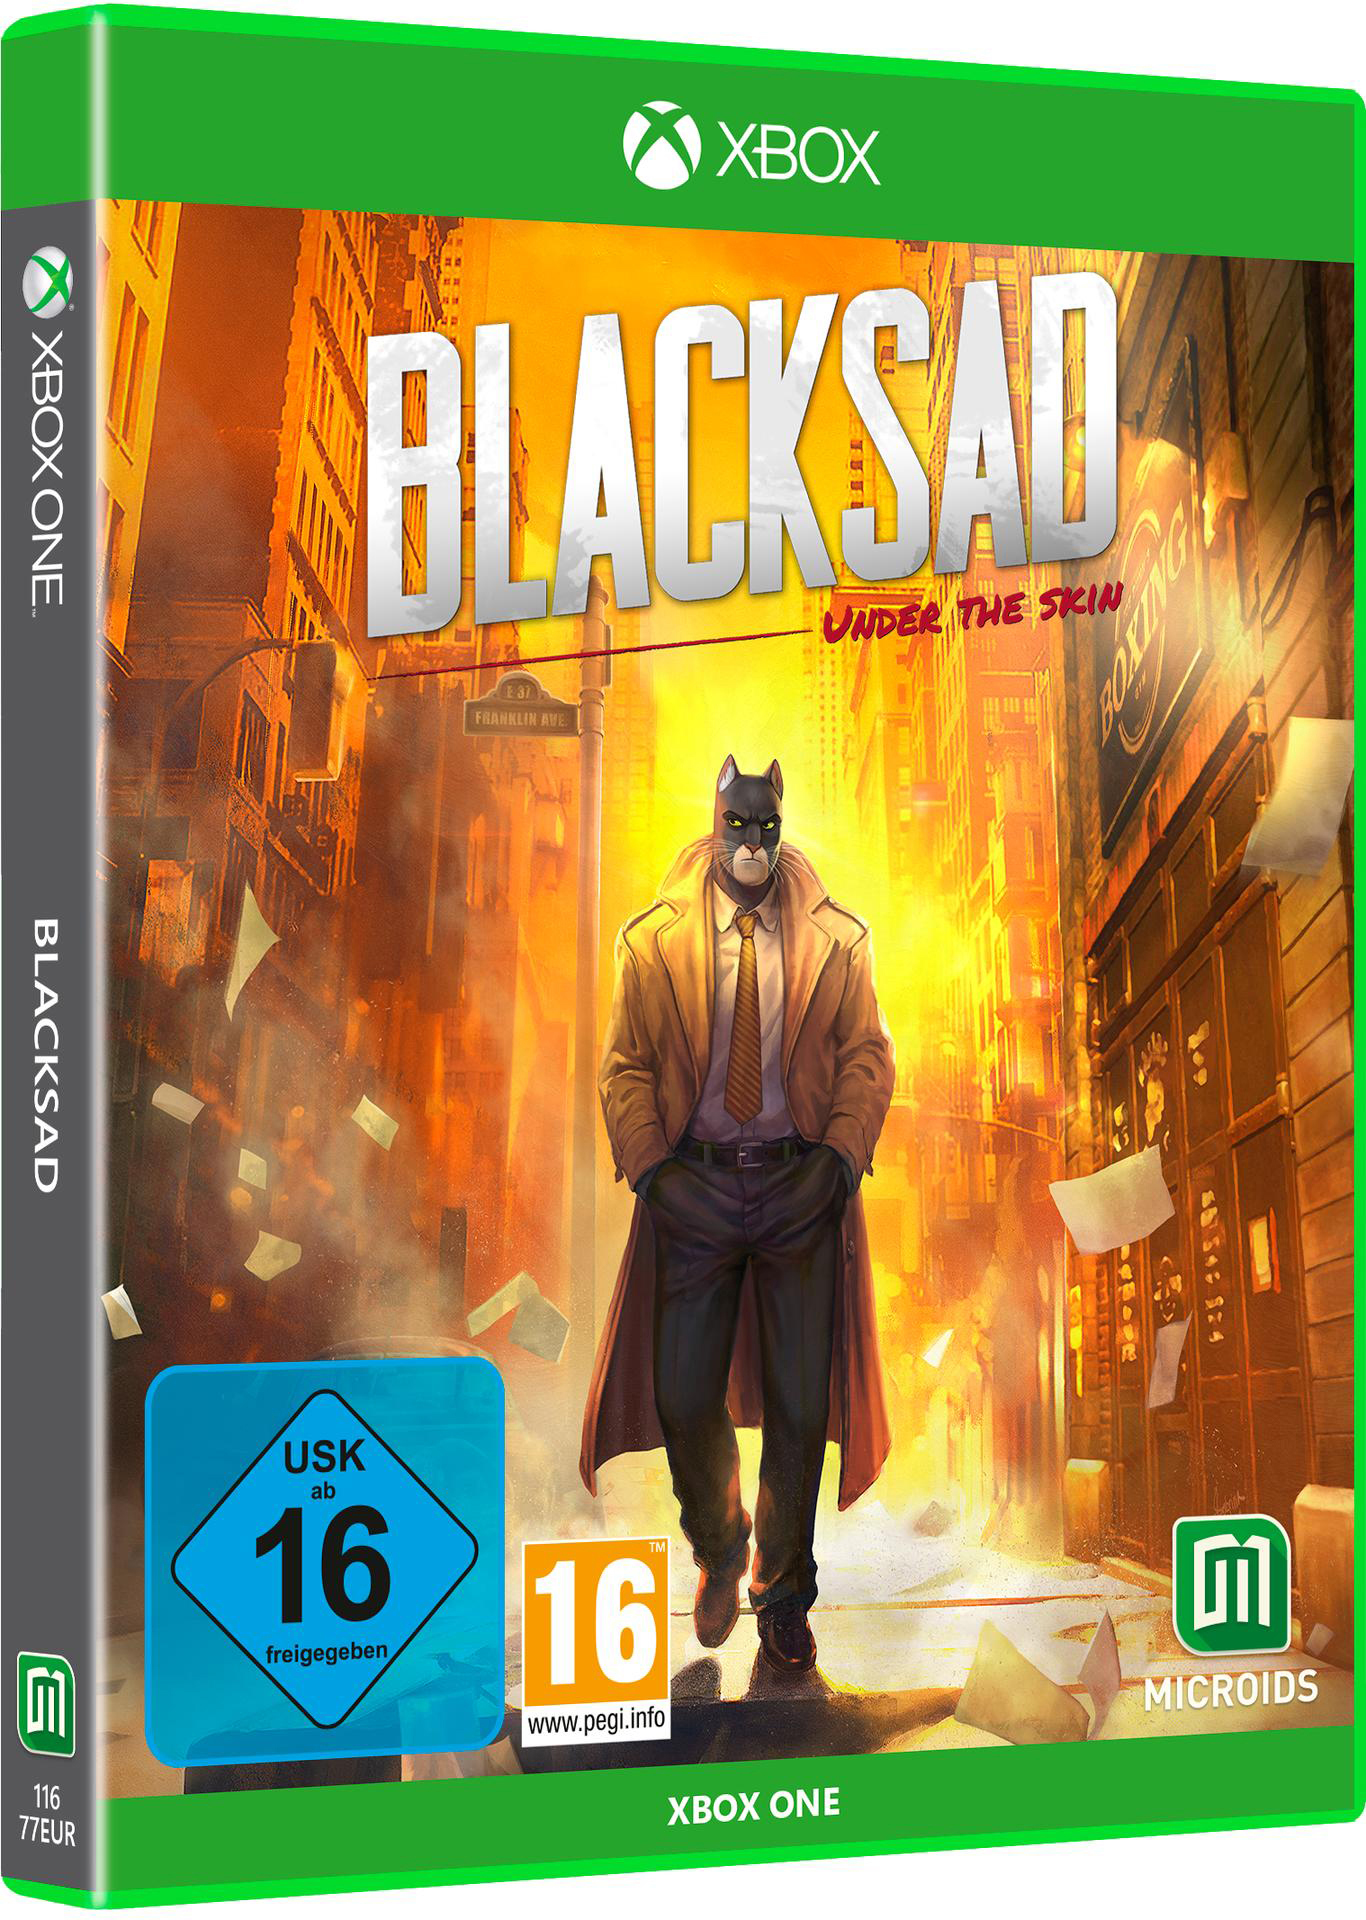 the Skin Blacksad: Under - [Xbox One]